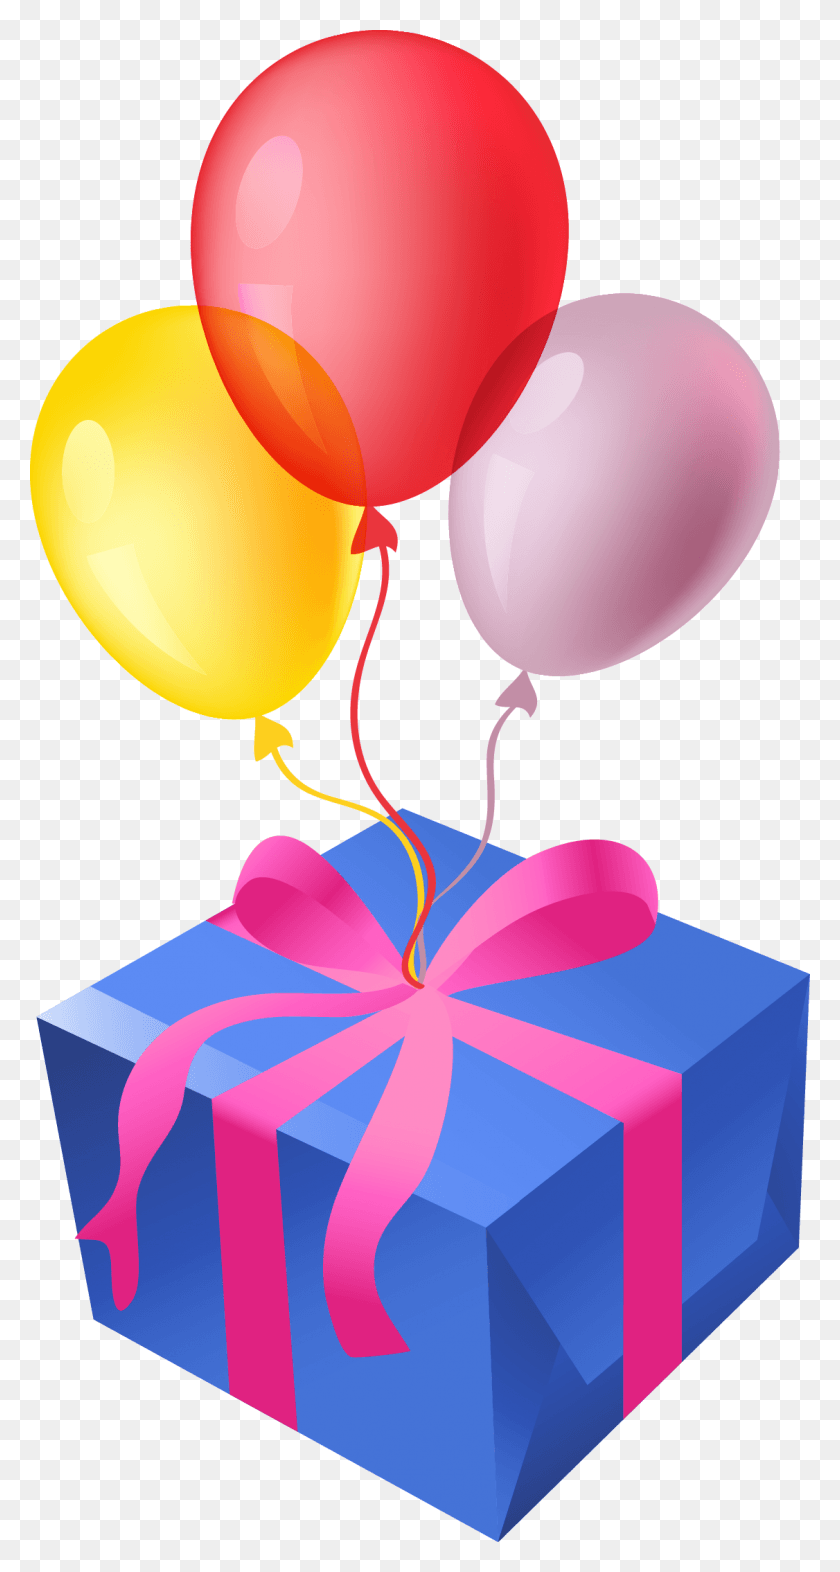 1126x2183 Box Vector Transprent Free Gifts And Balloon Vector, Ball, Gift Descargar Hd Png